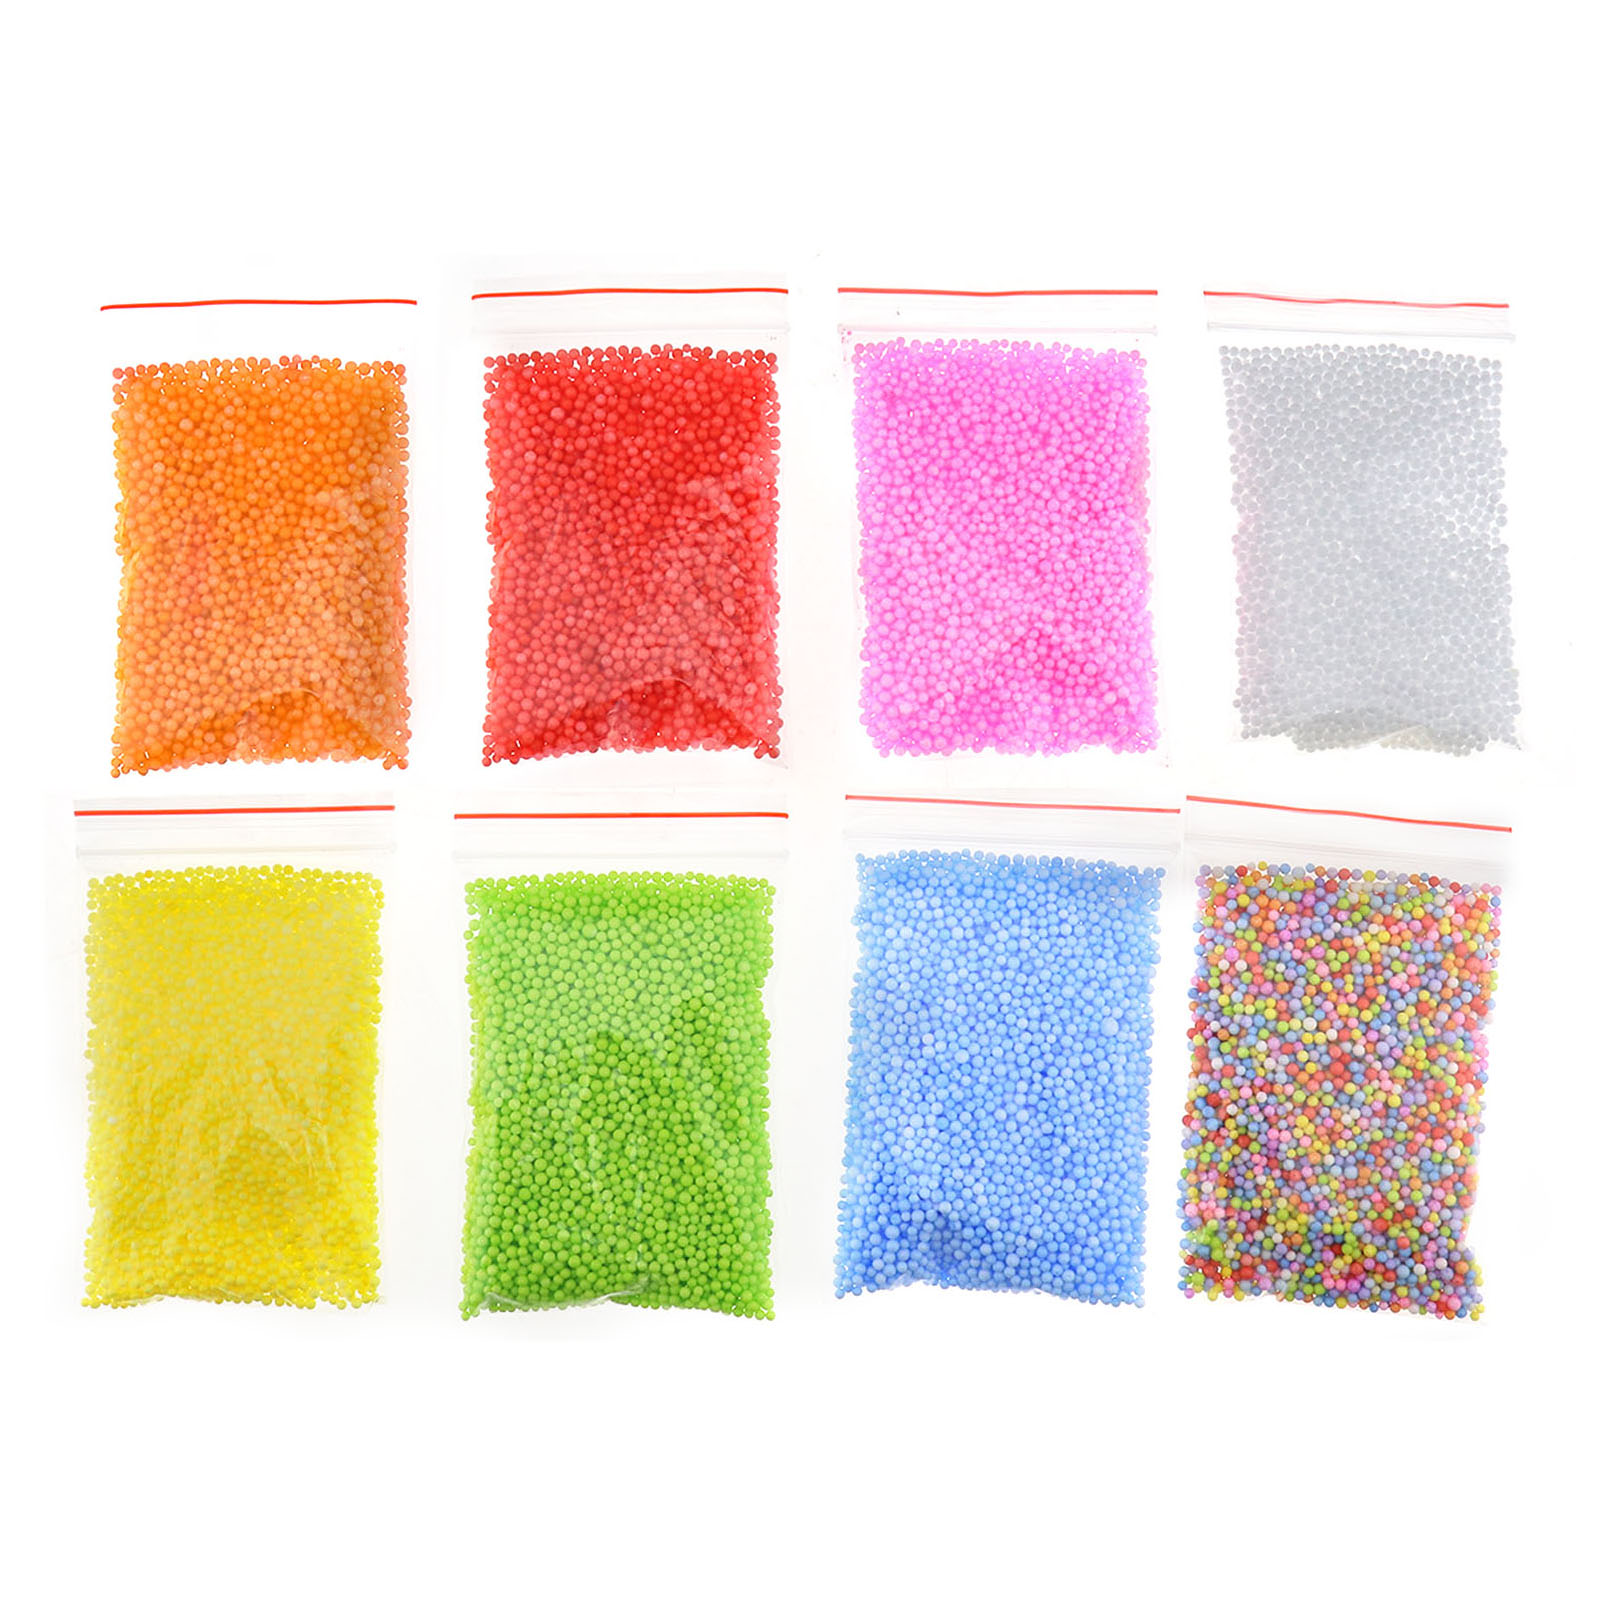 8 Pack Assorted Colors Polystyrene Styrofoam Filler Foam Mini Beads Balls Crafts 95509649973 Ebay